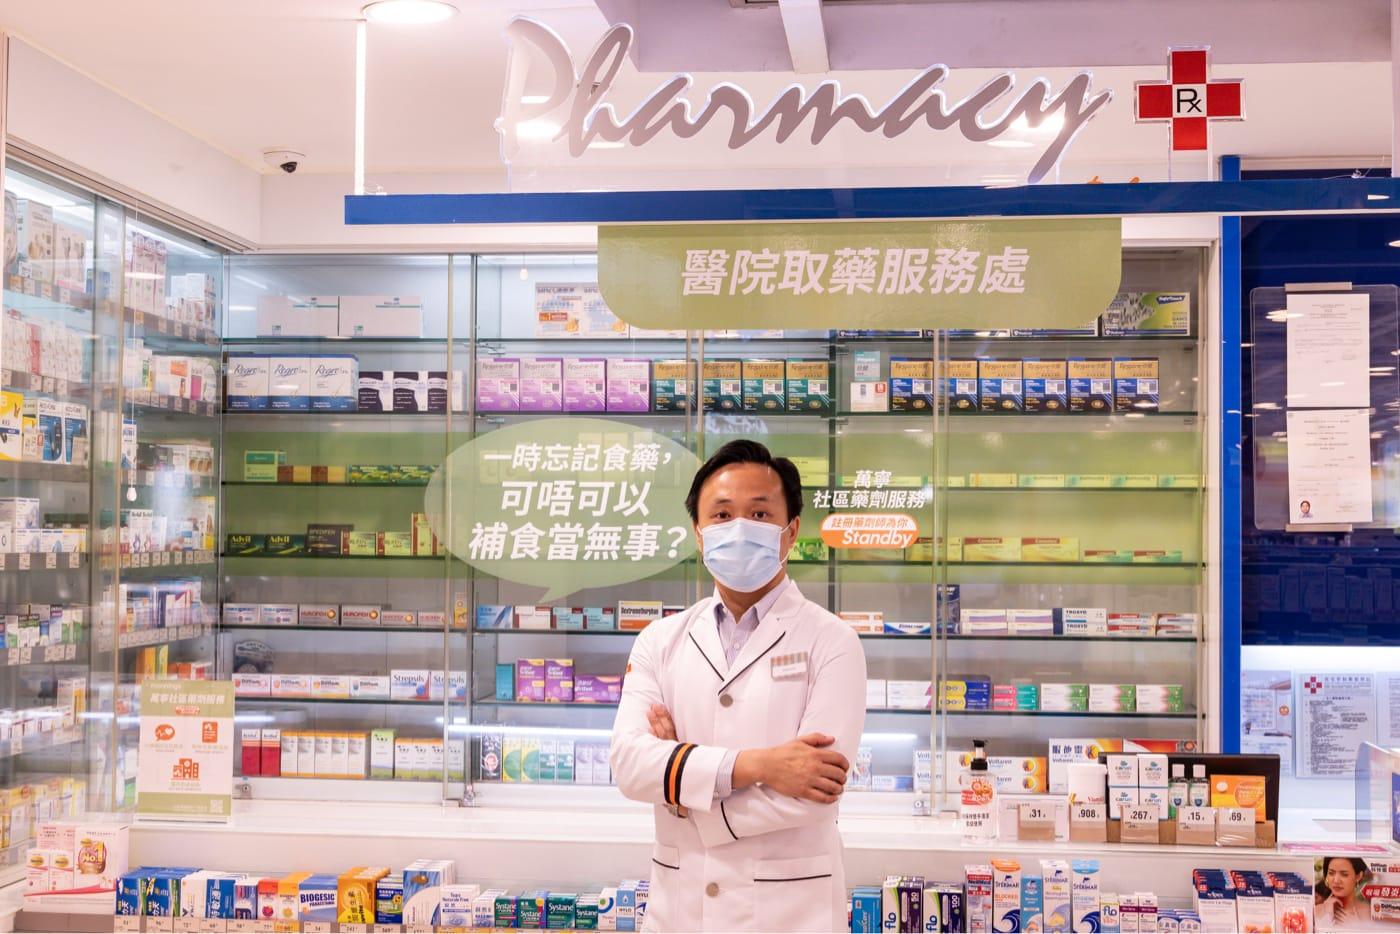 Pharmacist in mannings store